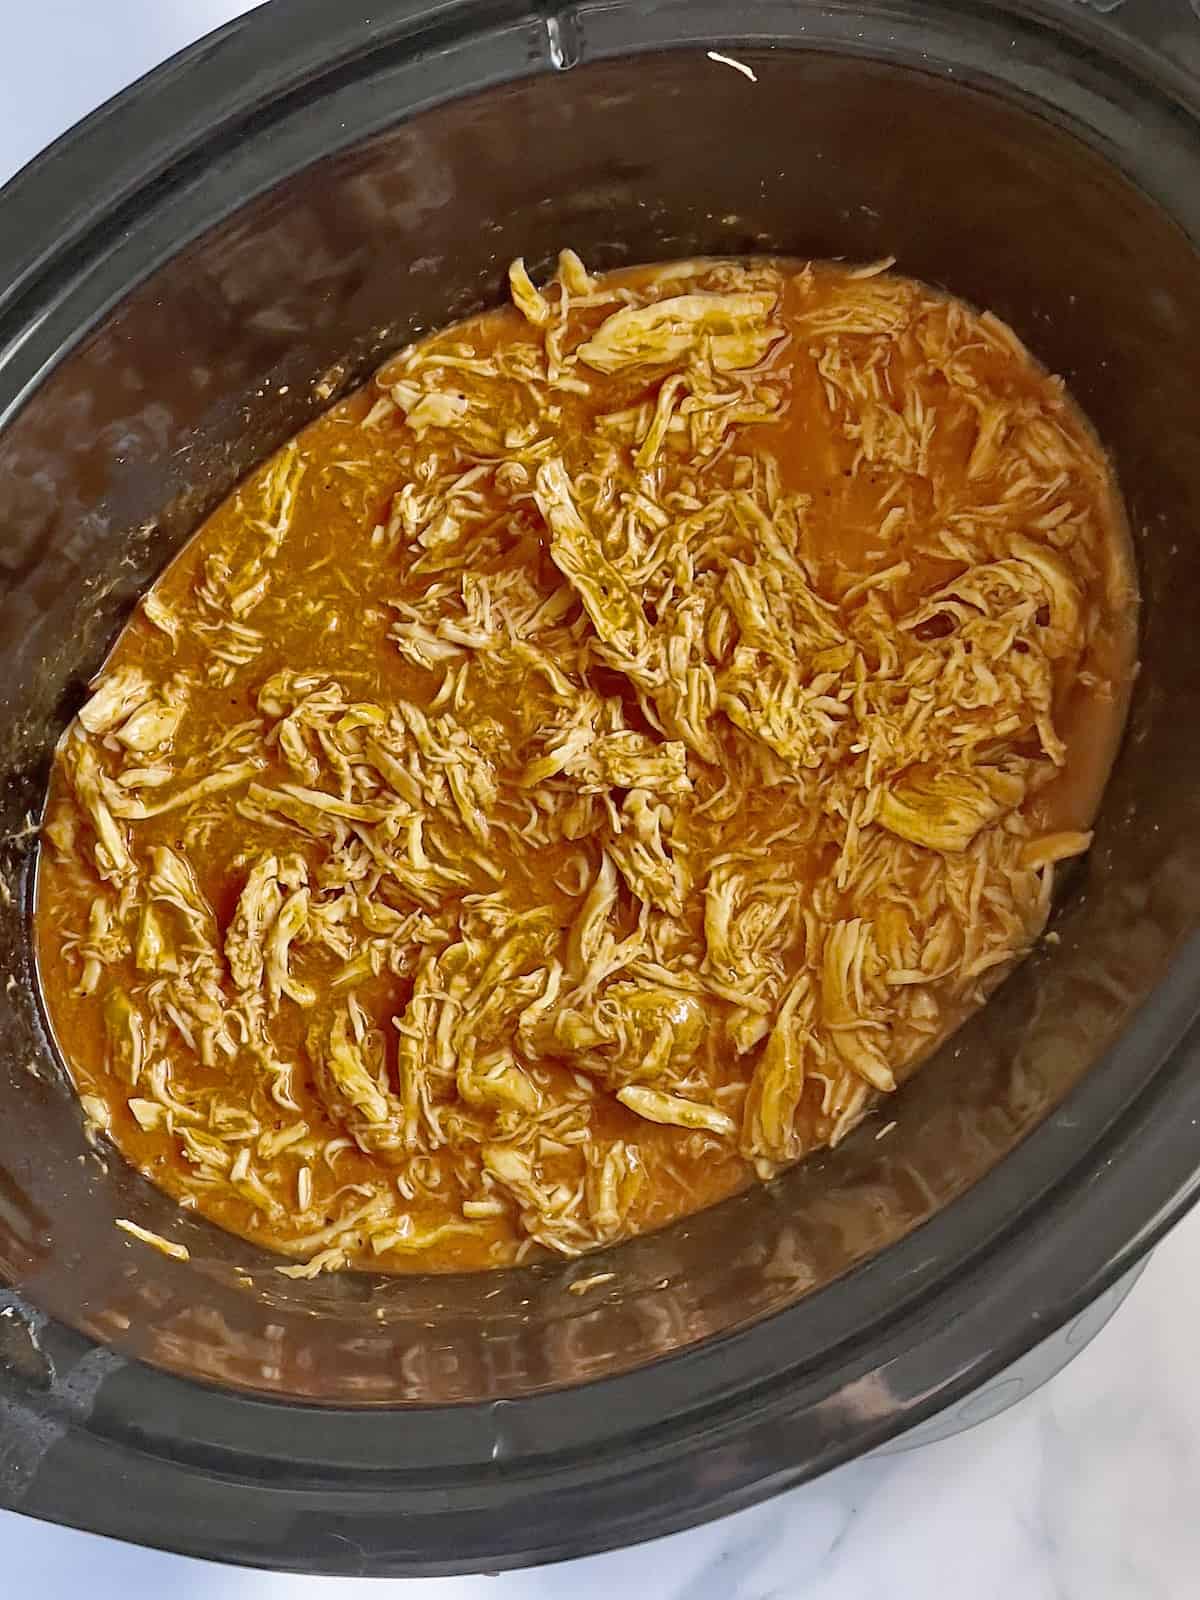 shredded buffalo chicken in hot sauce in a slow cooker